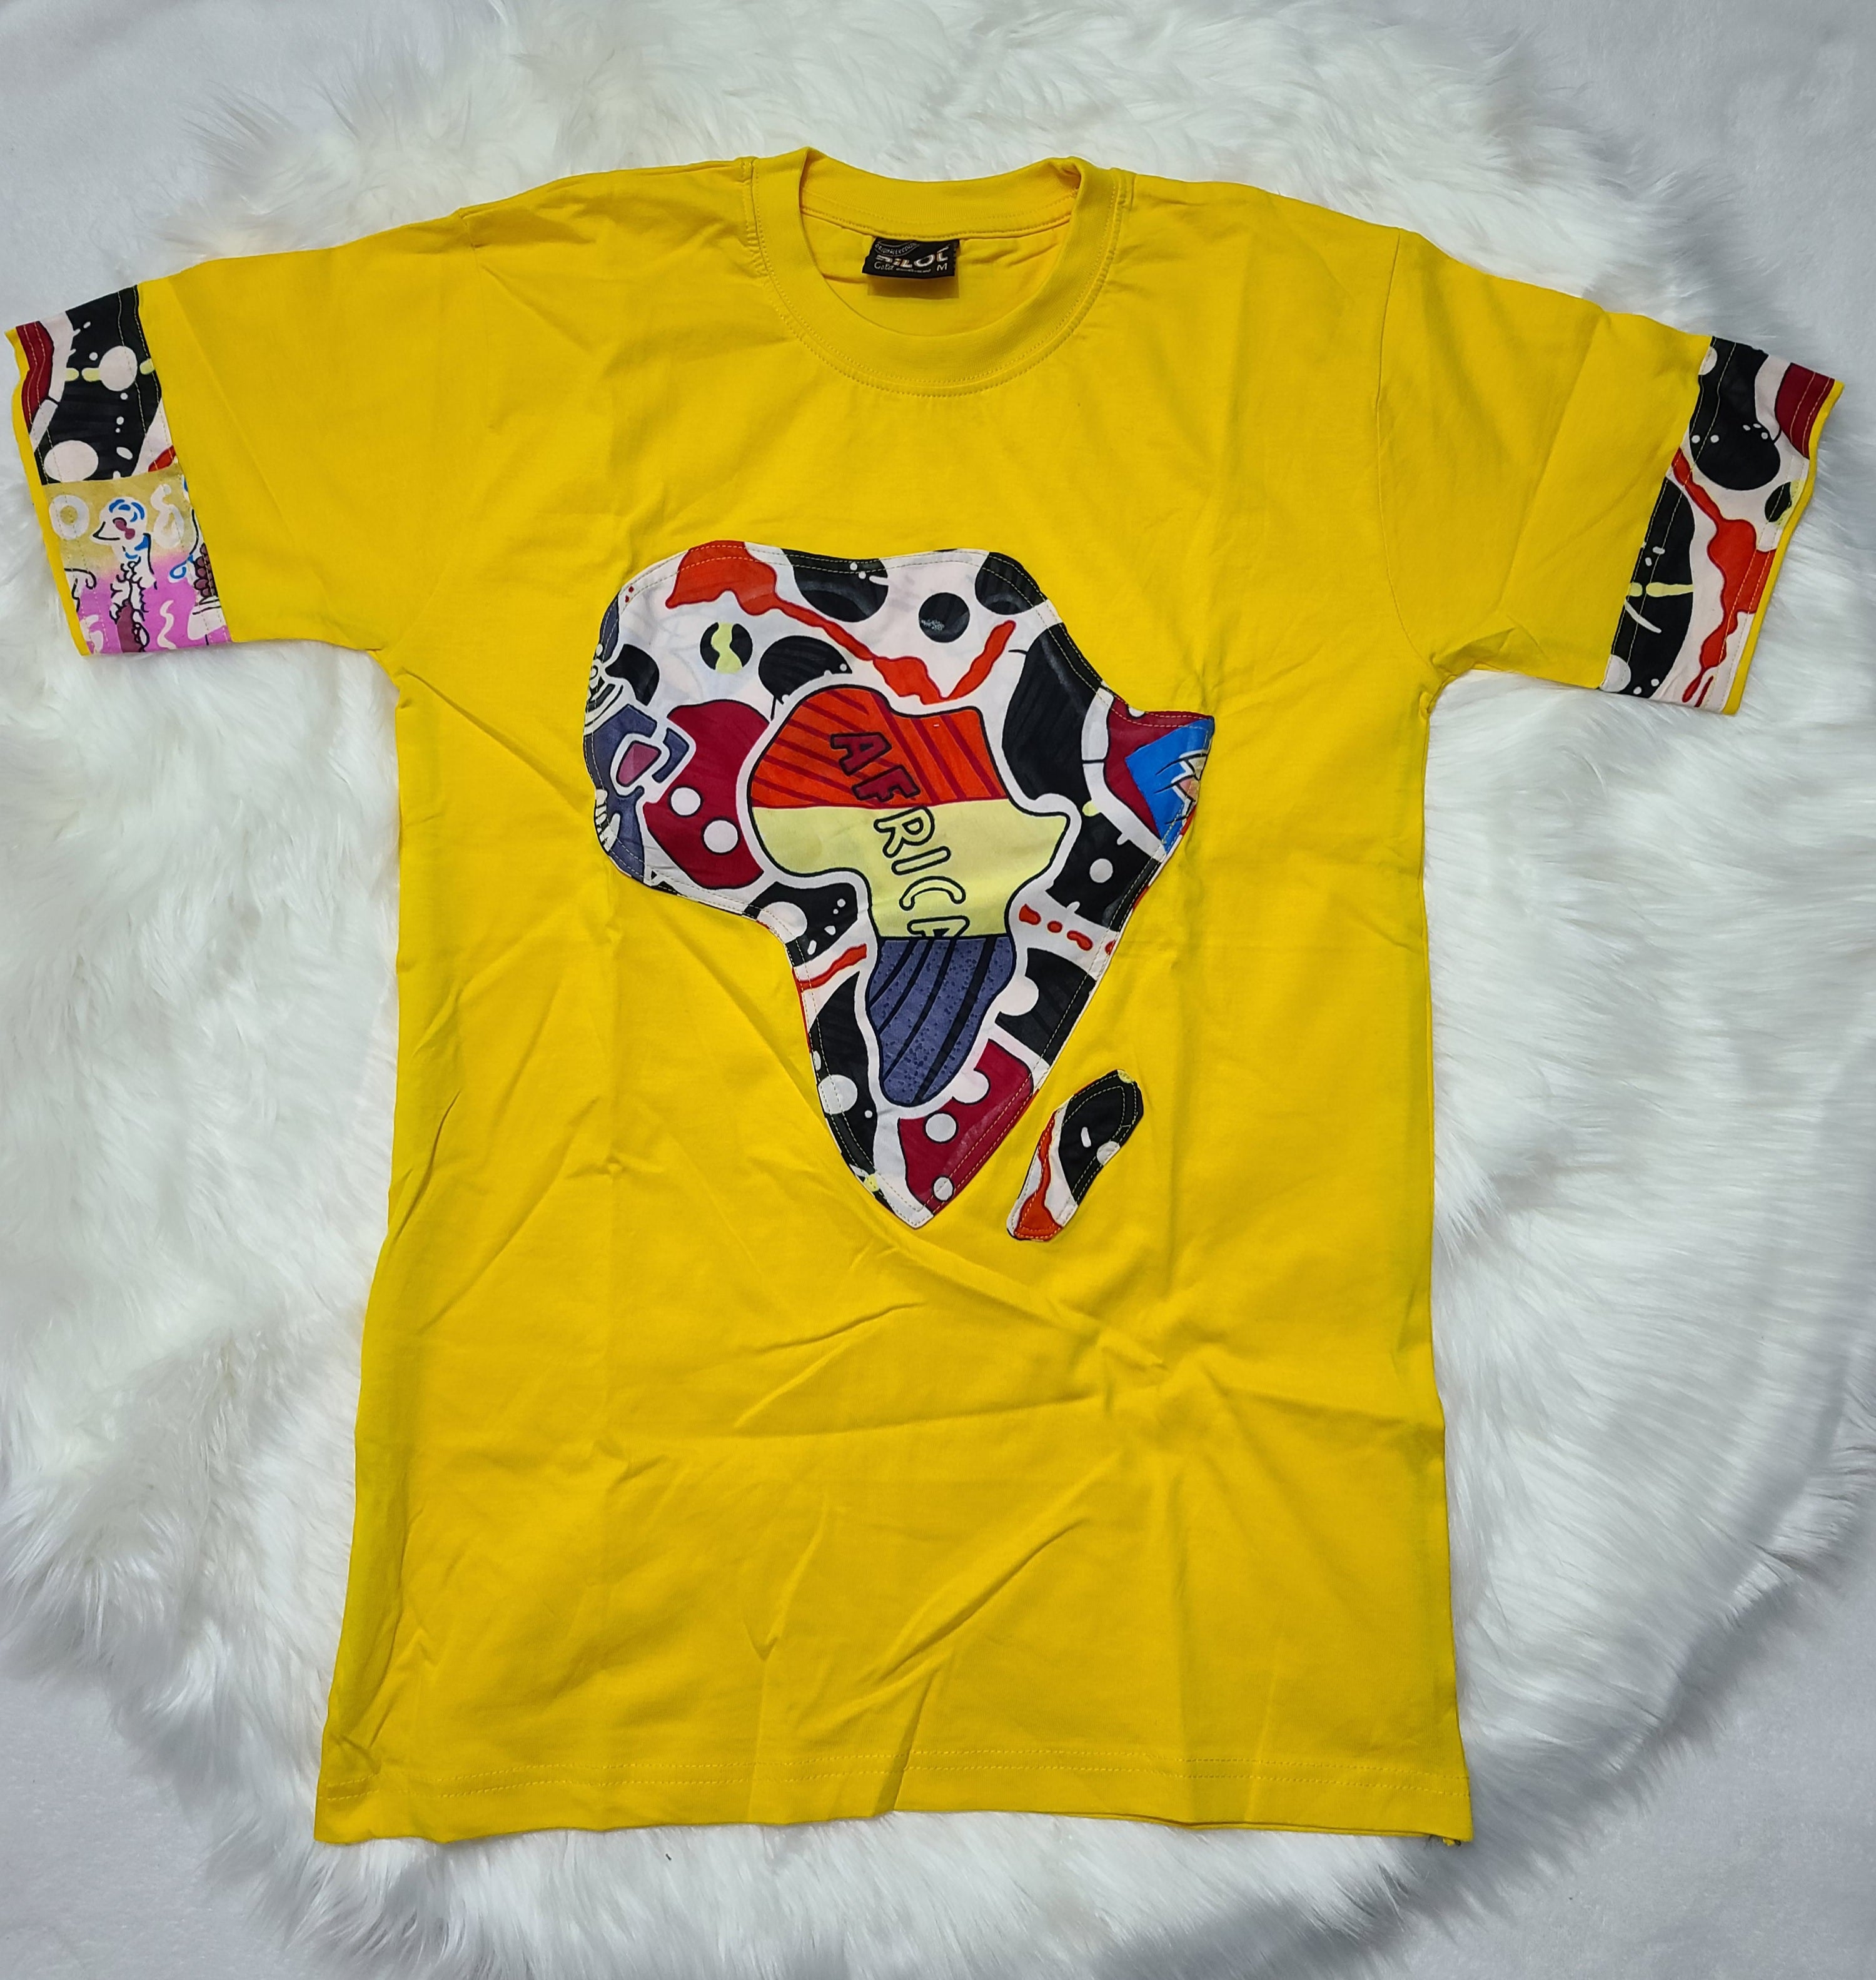 African print t-shirts